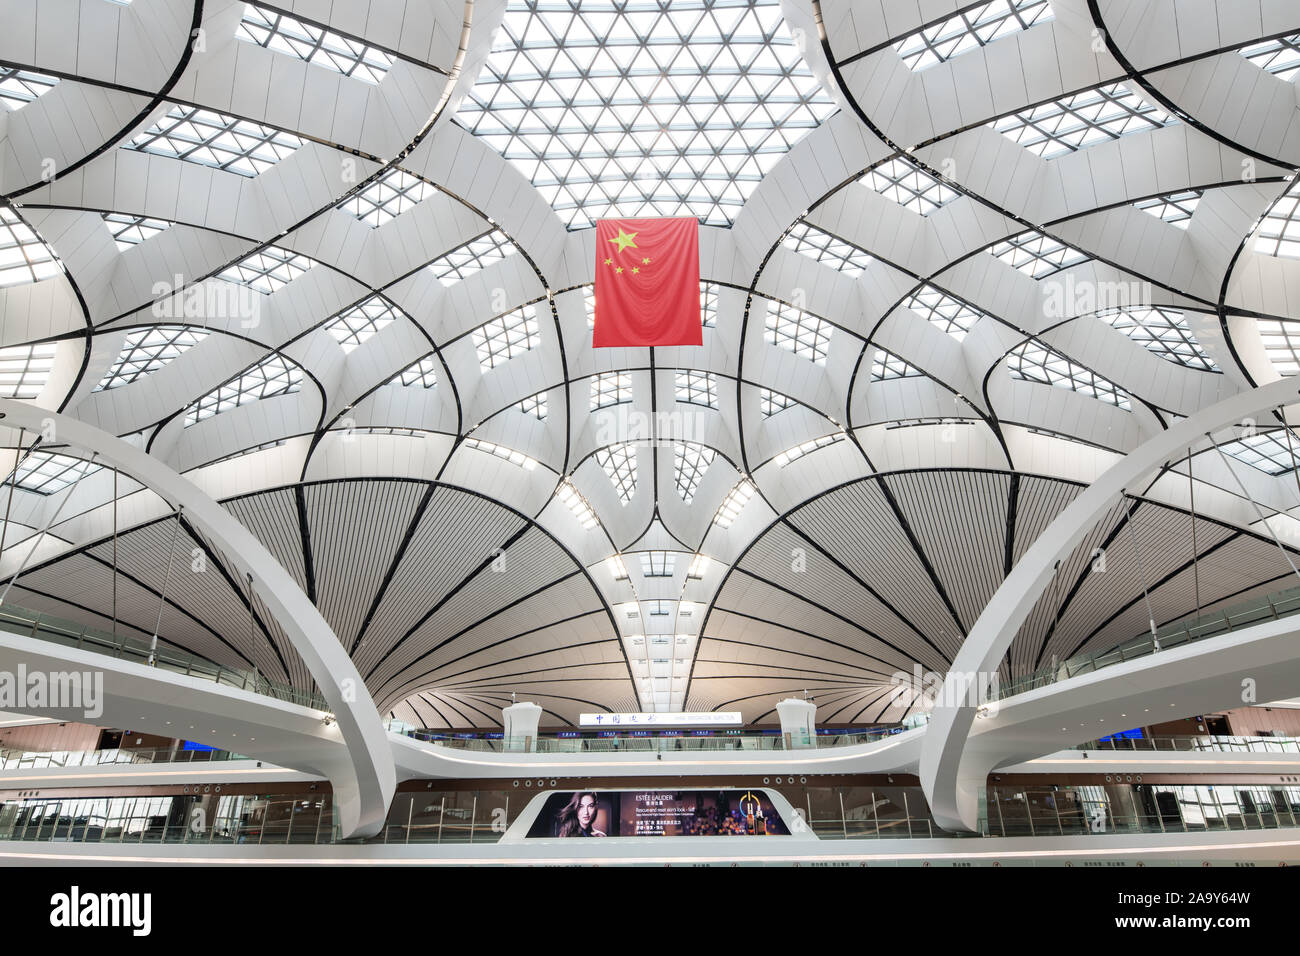 Peking, China - November 4, 2019. Innenraum der größte Flughafen der Welt, der daxing International Airport. Stockfoto